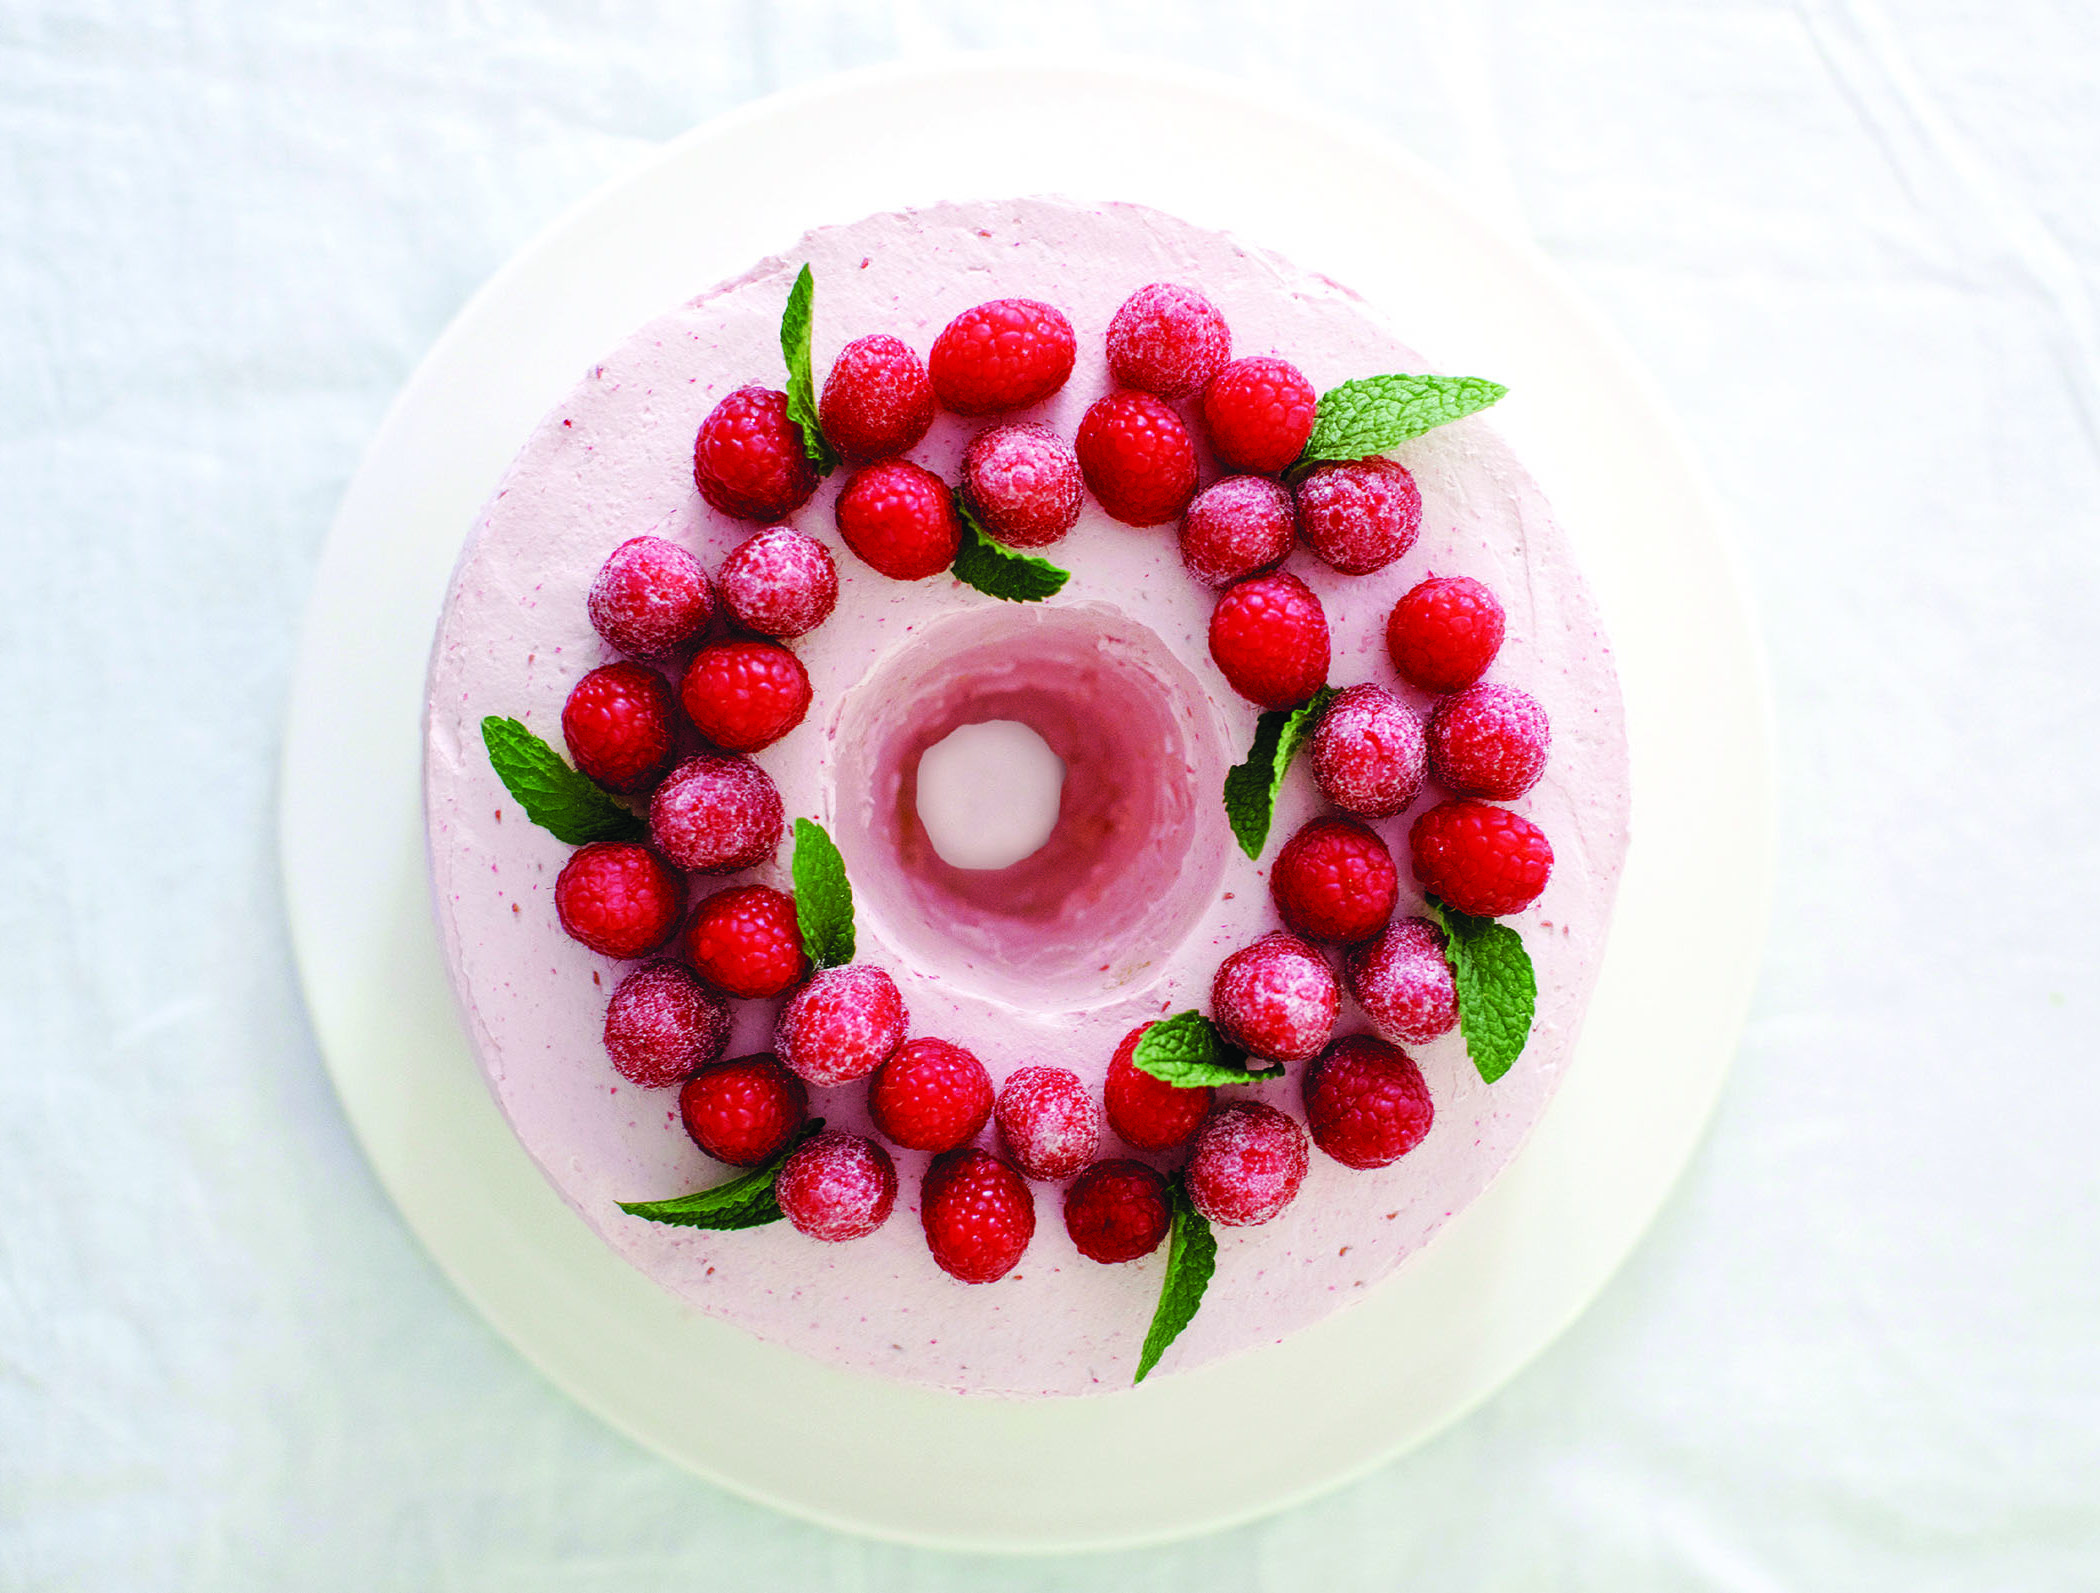 Lemon chiffon cake with raspberries